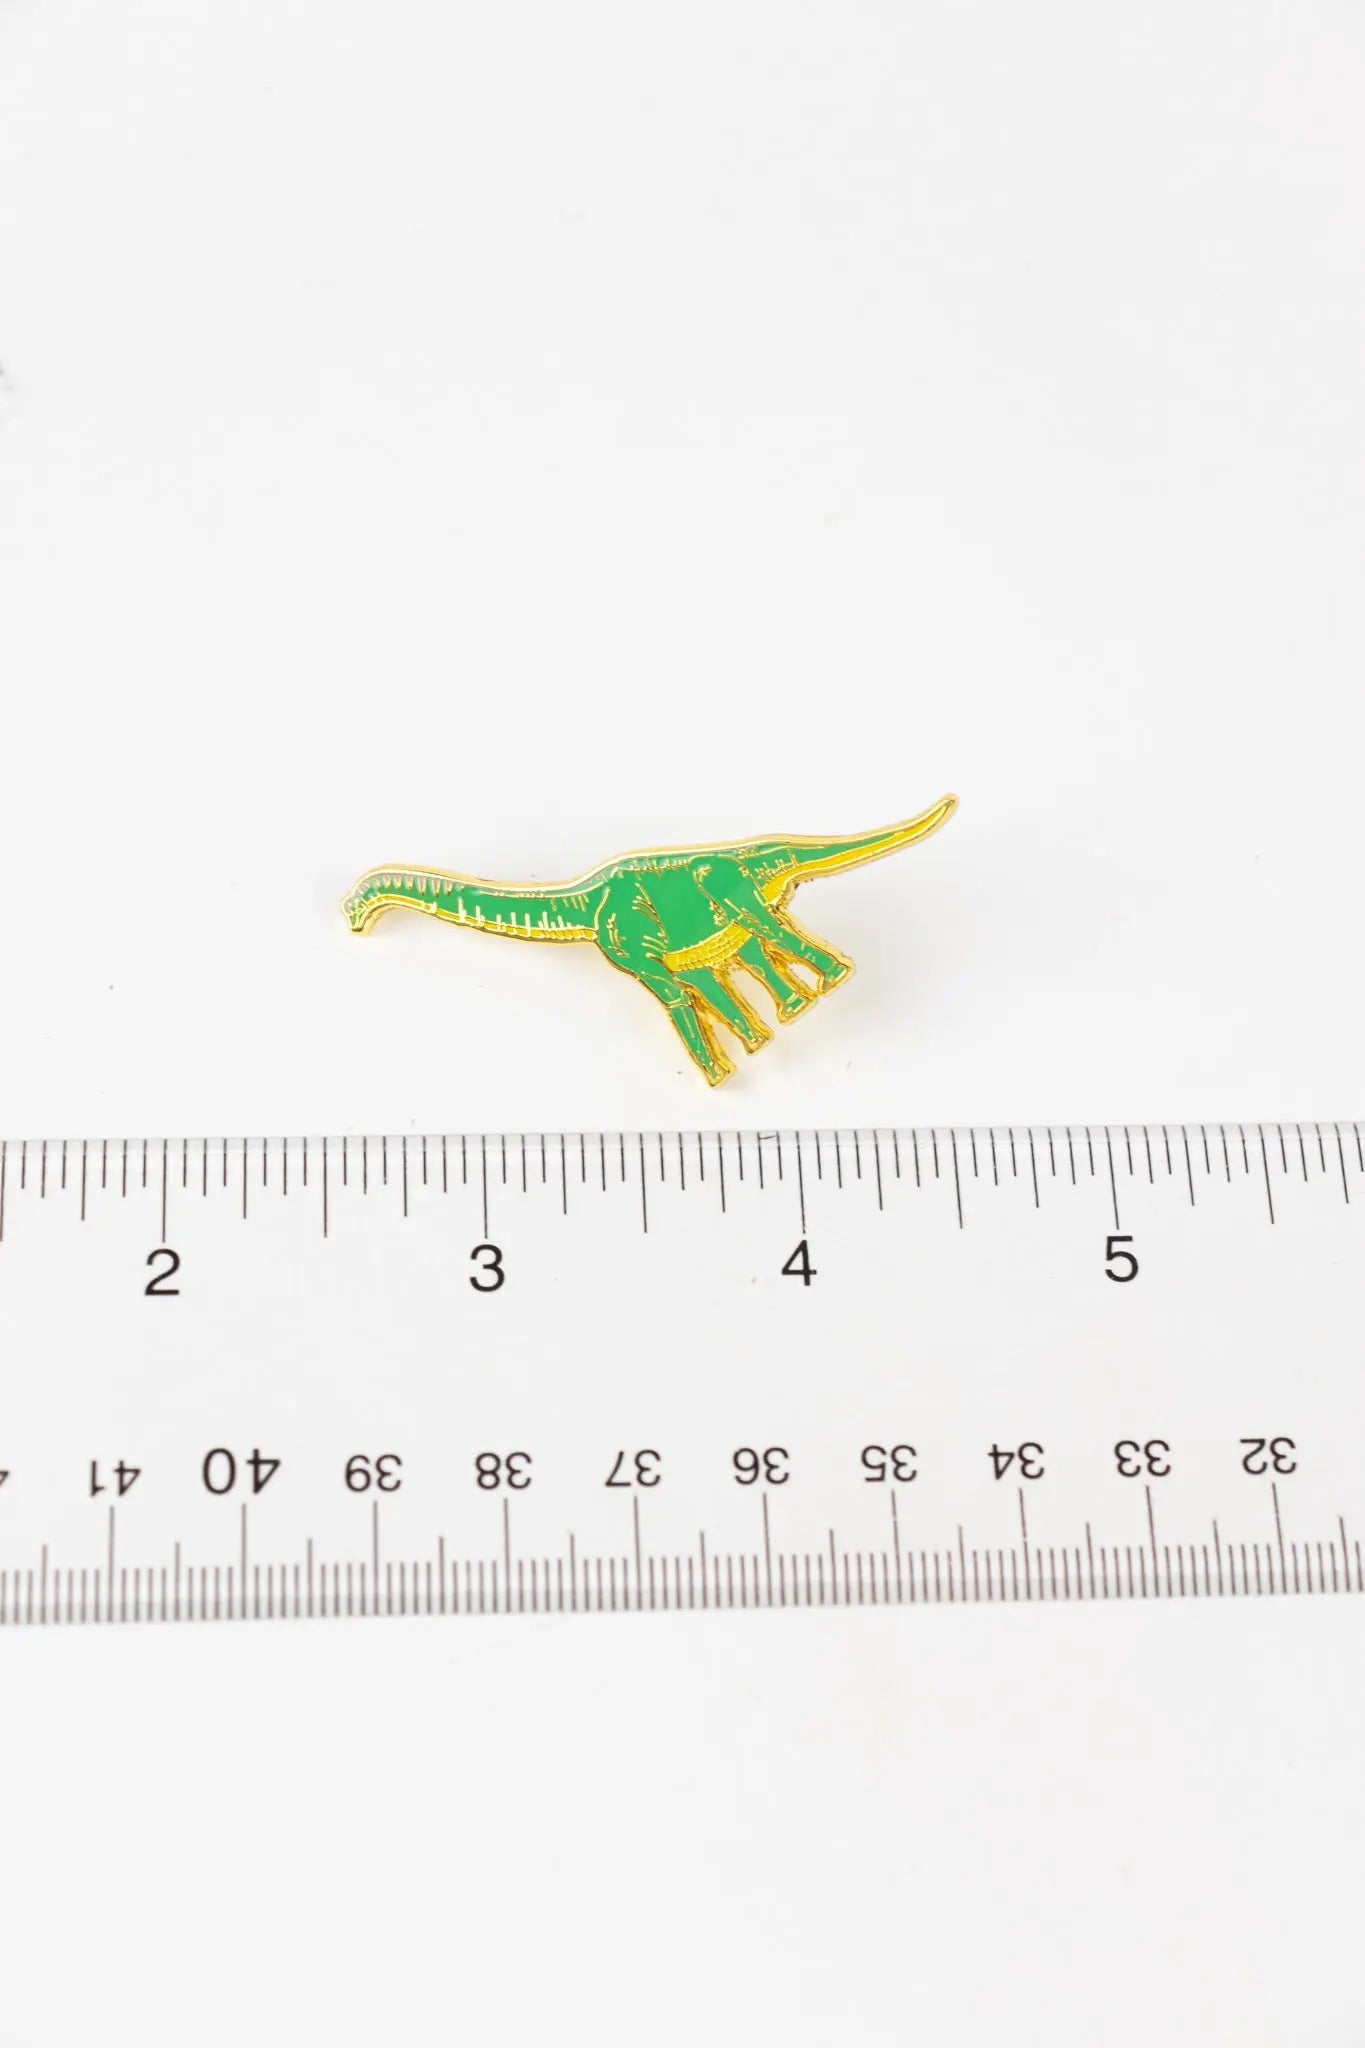 Brachiosaurus Pin - Stemcell Science Shop